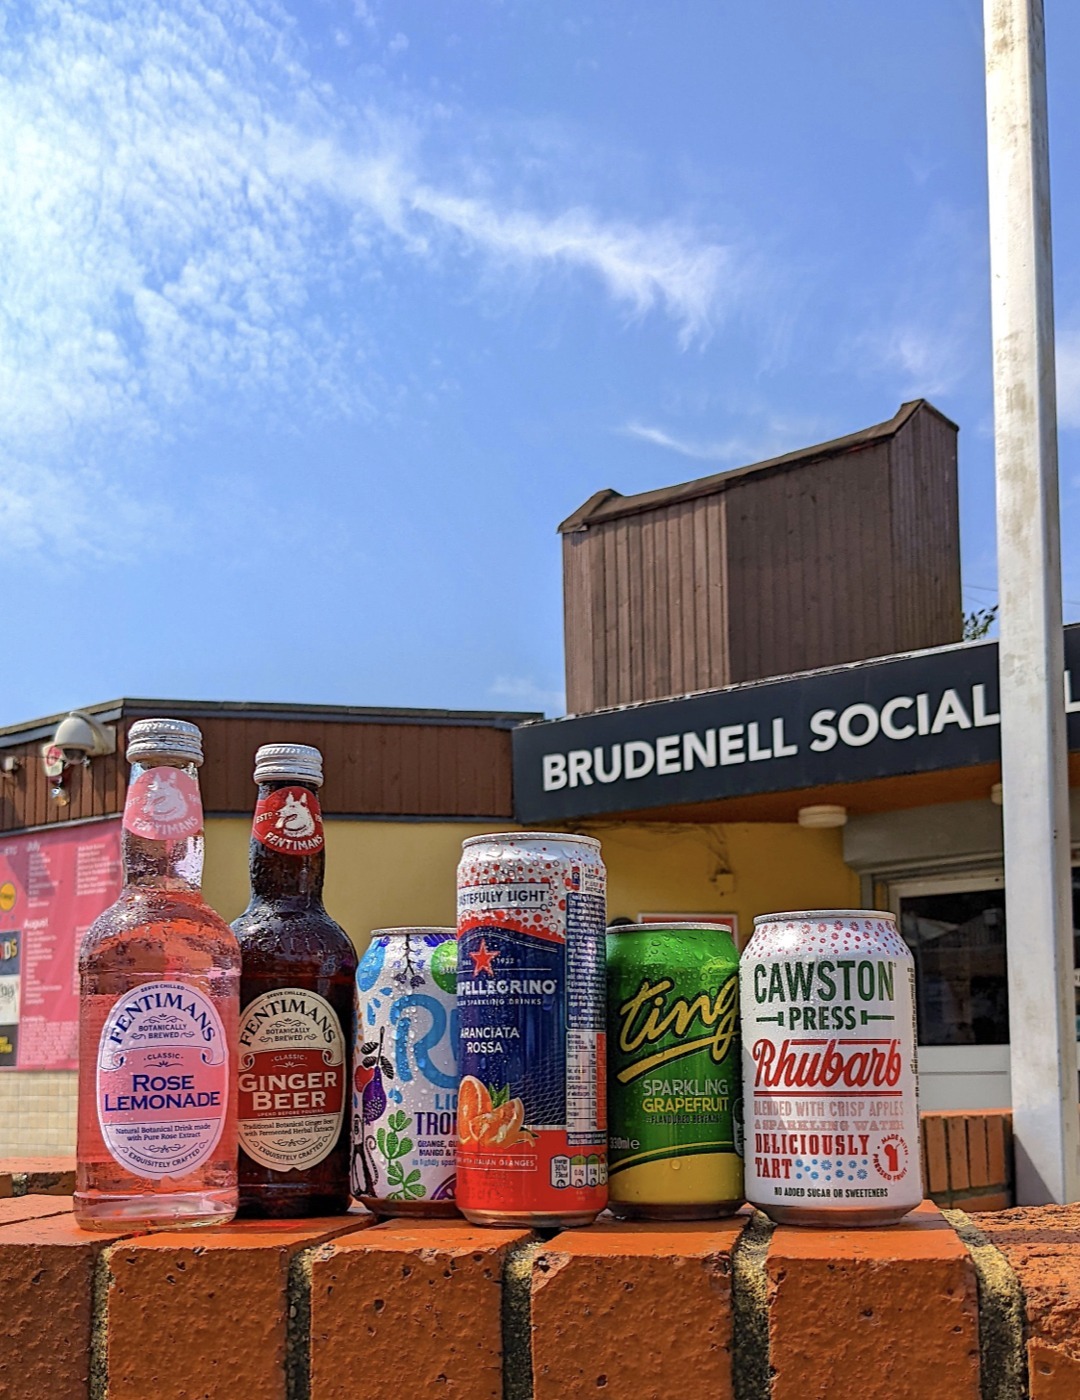 Brudenell Social Club, Leeds